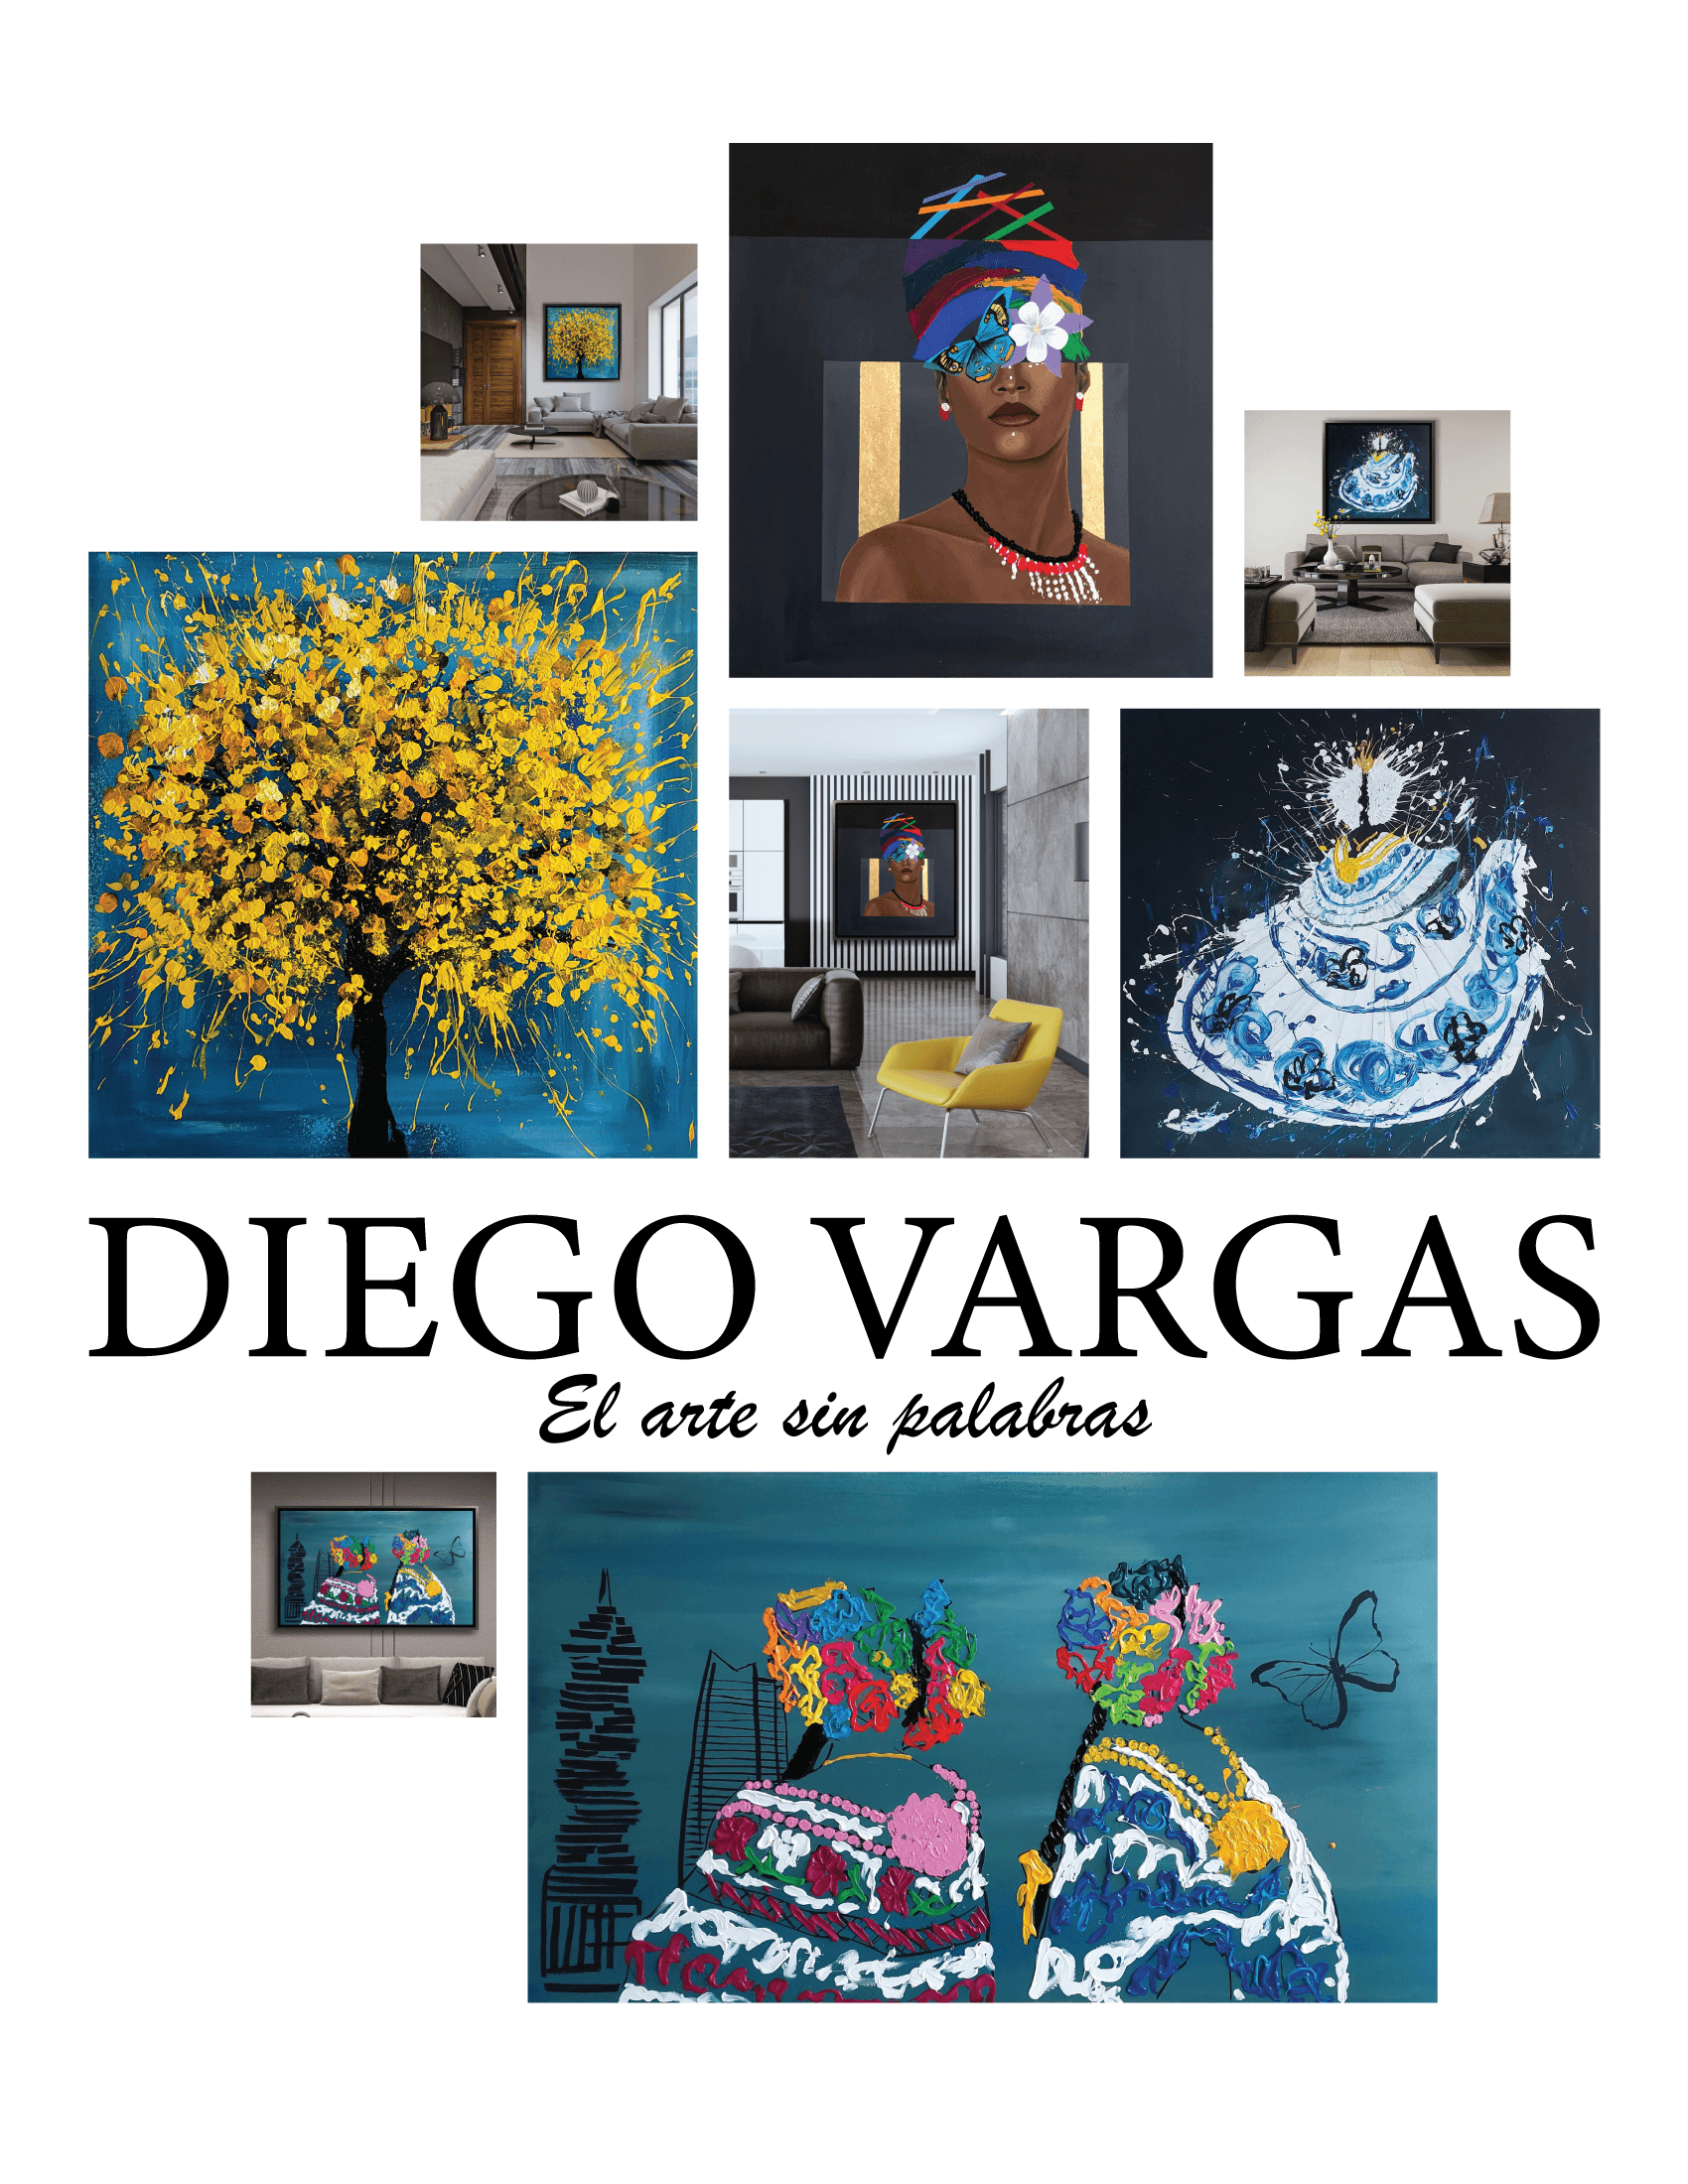 Diego Vargas